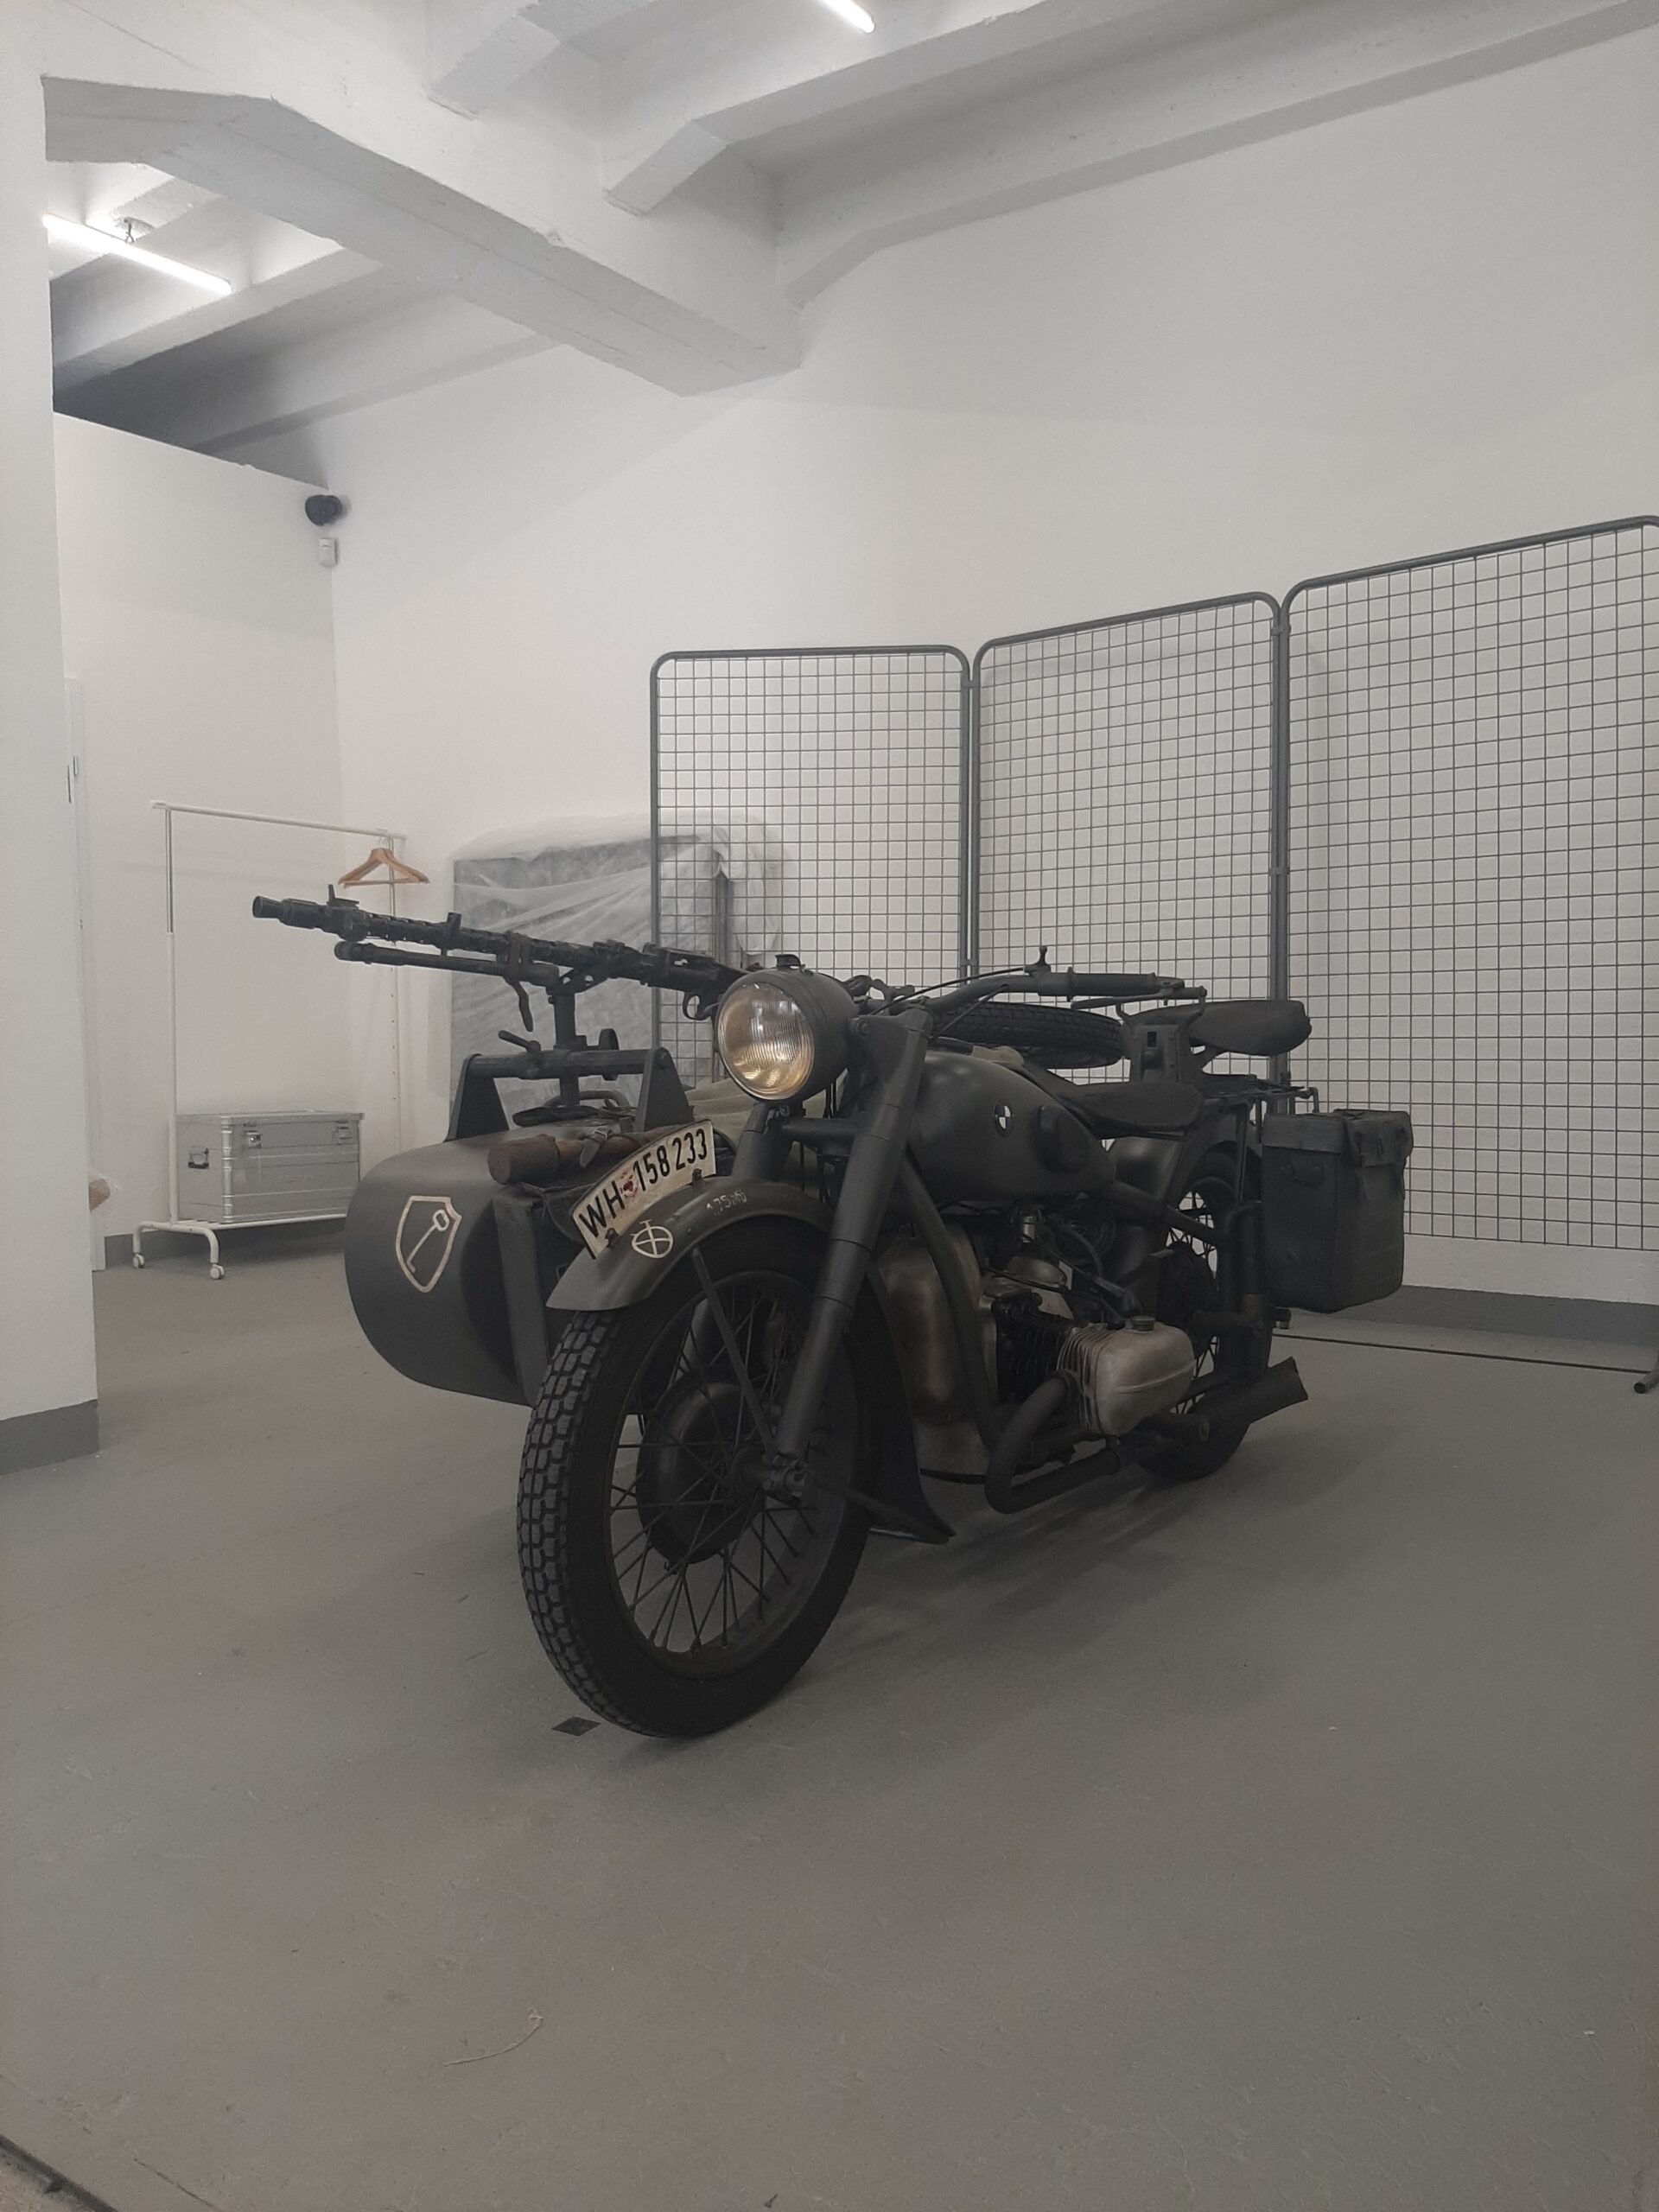 SMGL-2705 internationale Automobile u. Motorrad ausstellung Berlin 1938 -  War-Relics Buyers and Sellers of War Memorabilia, War Antiques